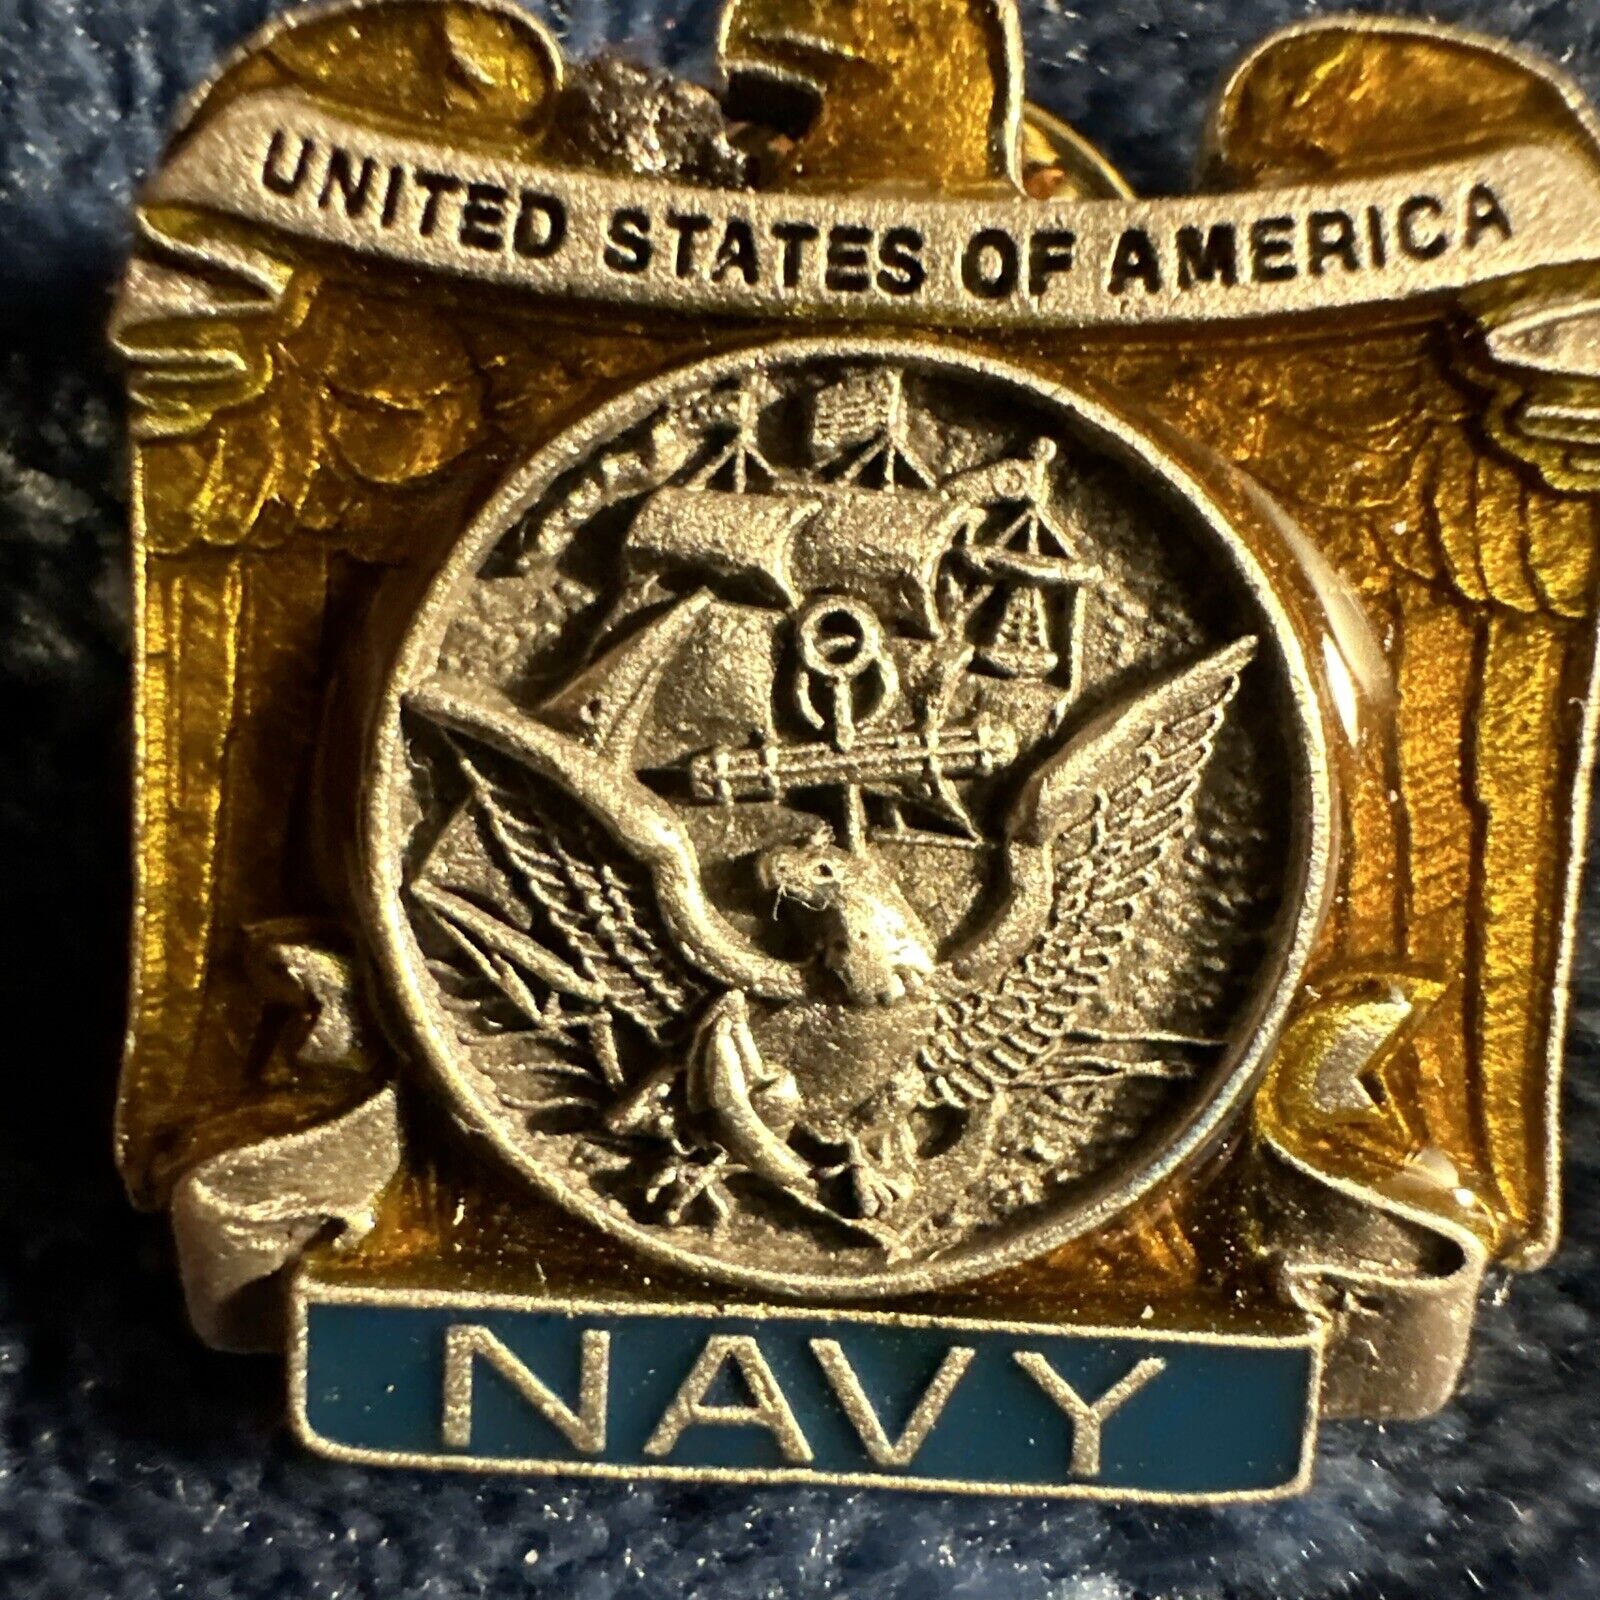 United States Navy vintage hat pin